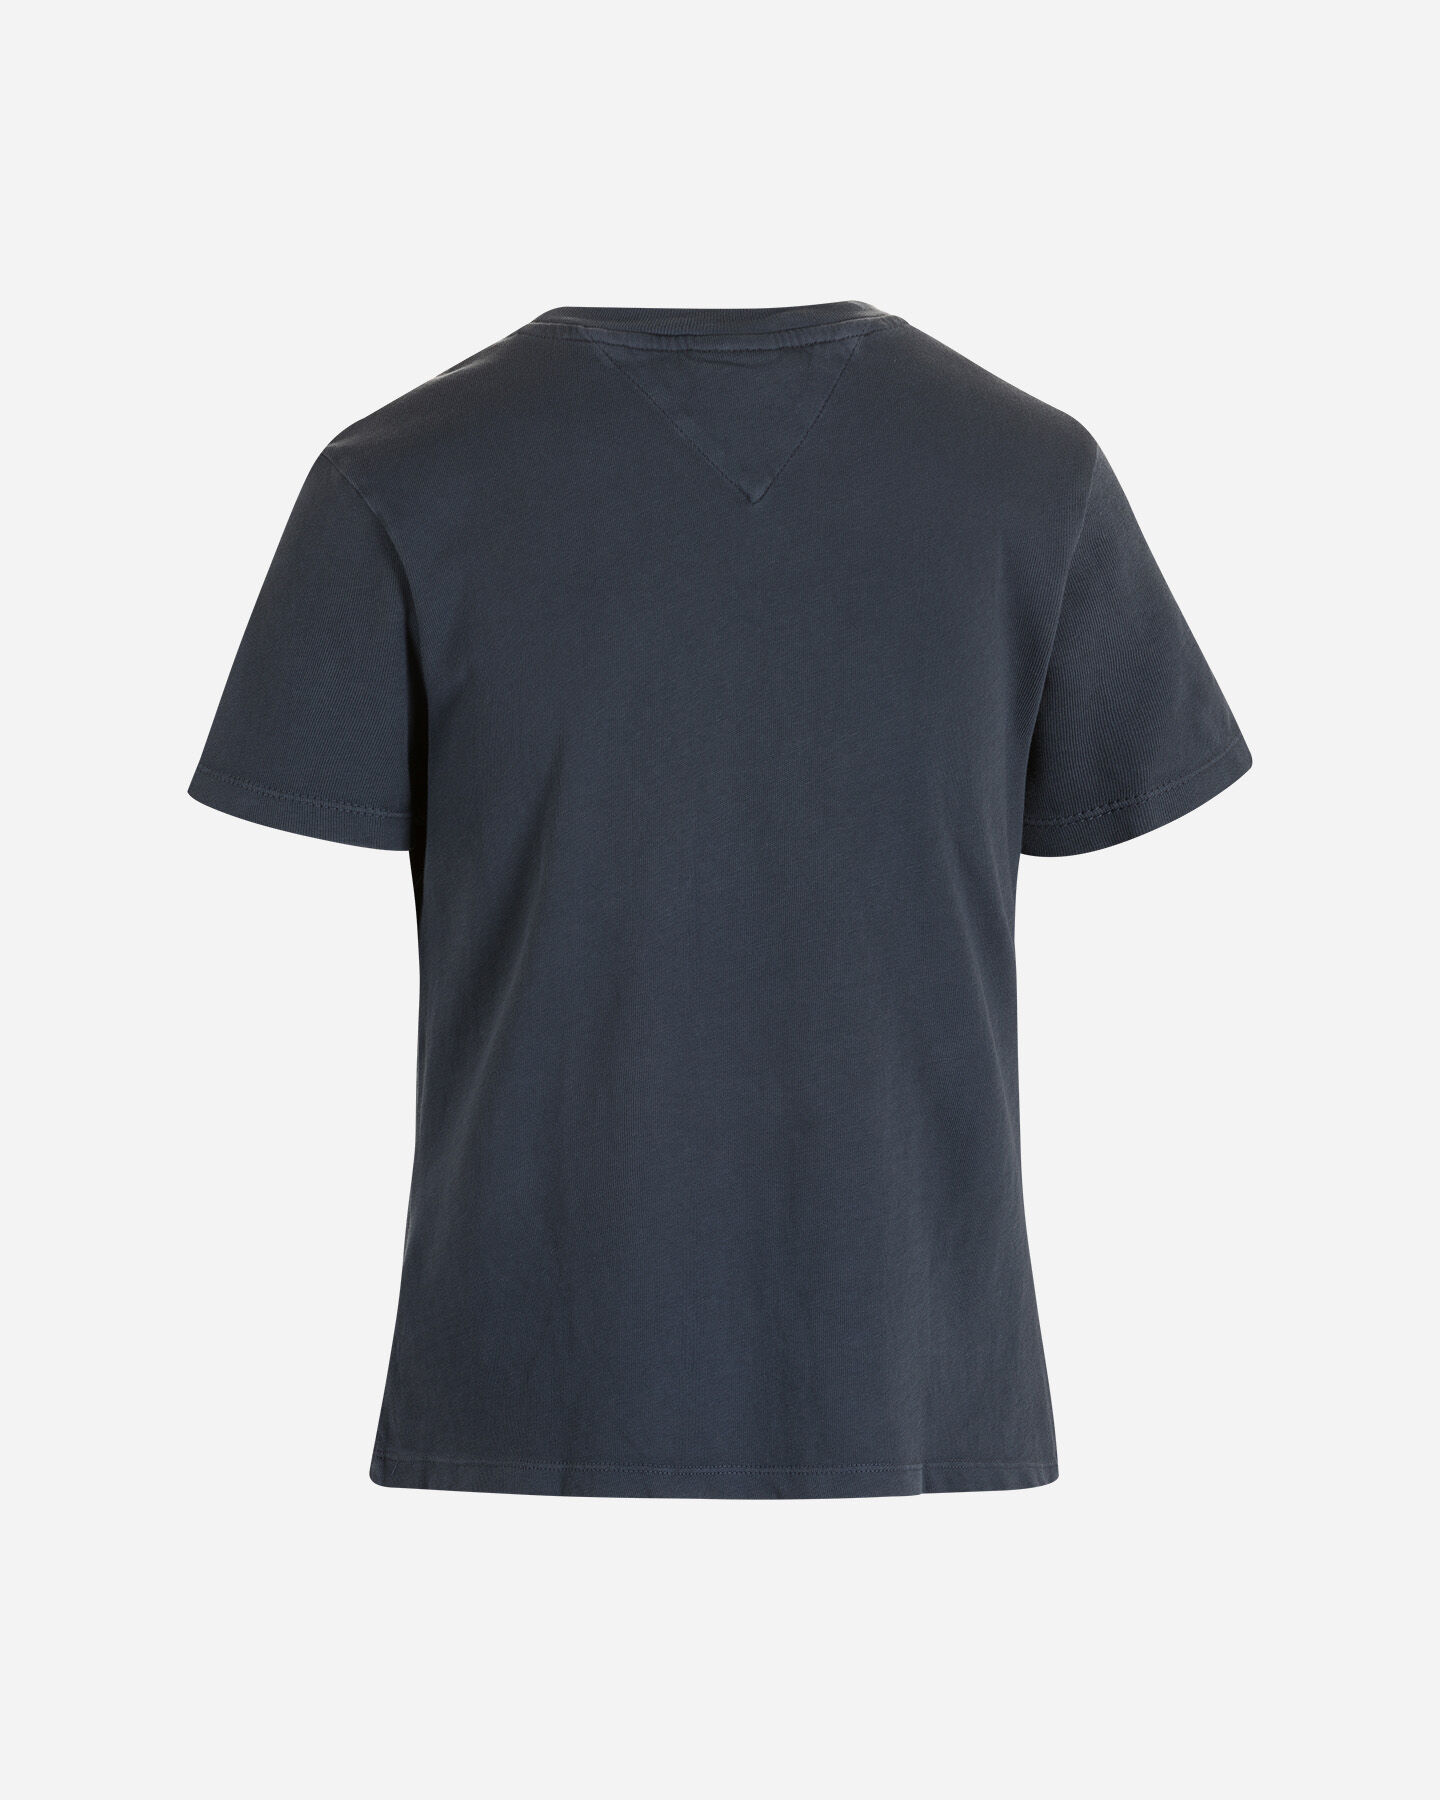  T-Shirt TOMMY HILFIGER REGULAR LOGO TIE DYE W S4105955|C87|XS scatto 1